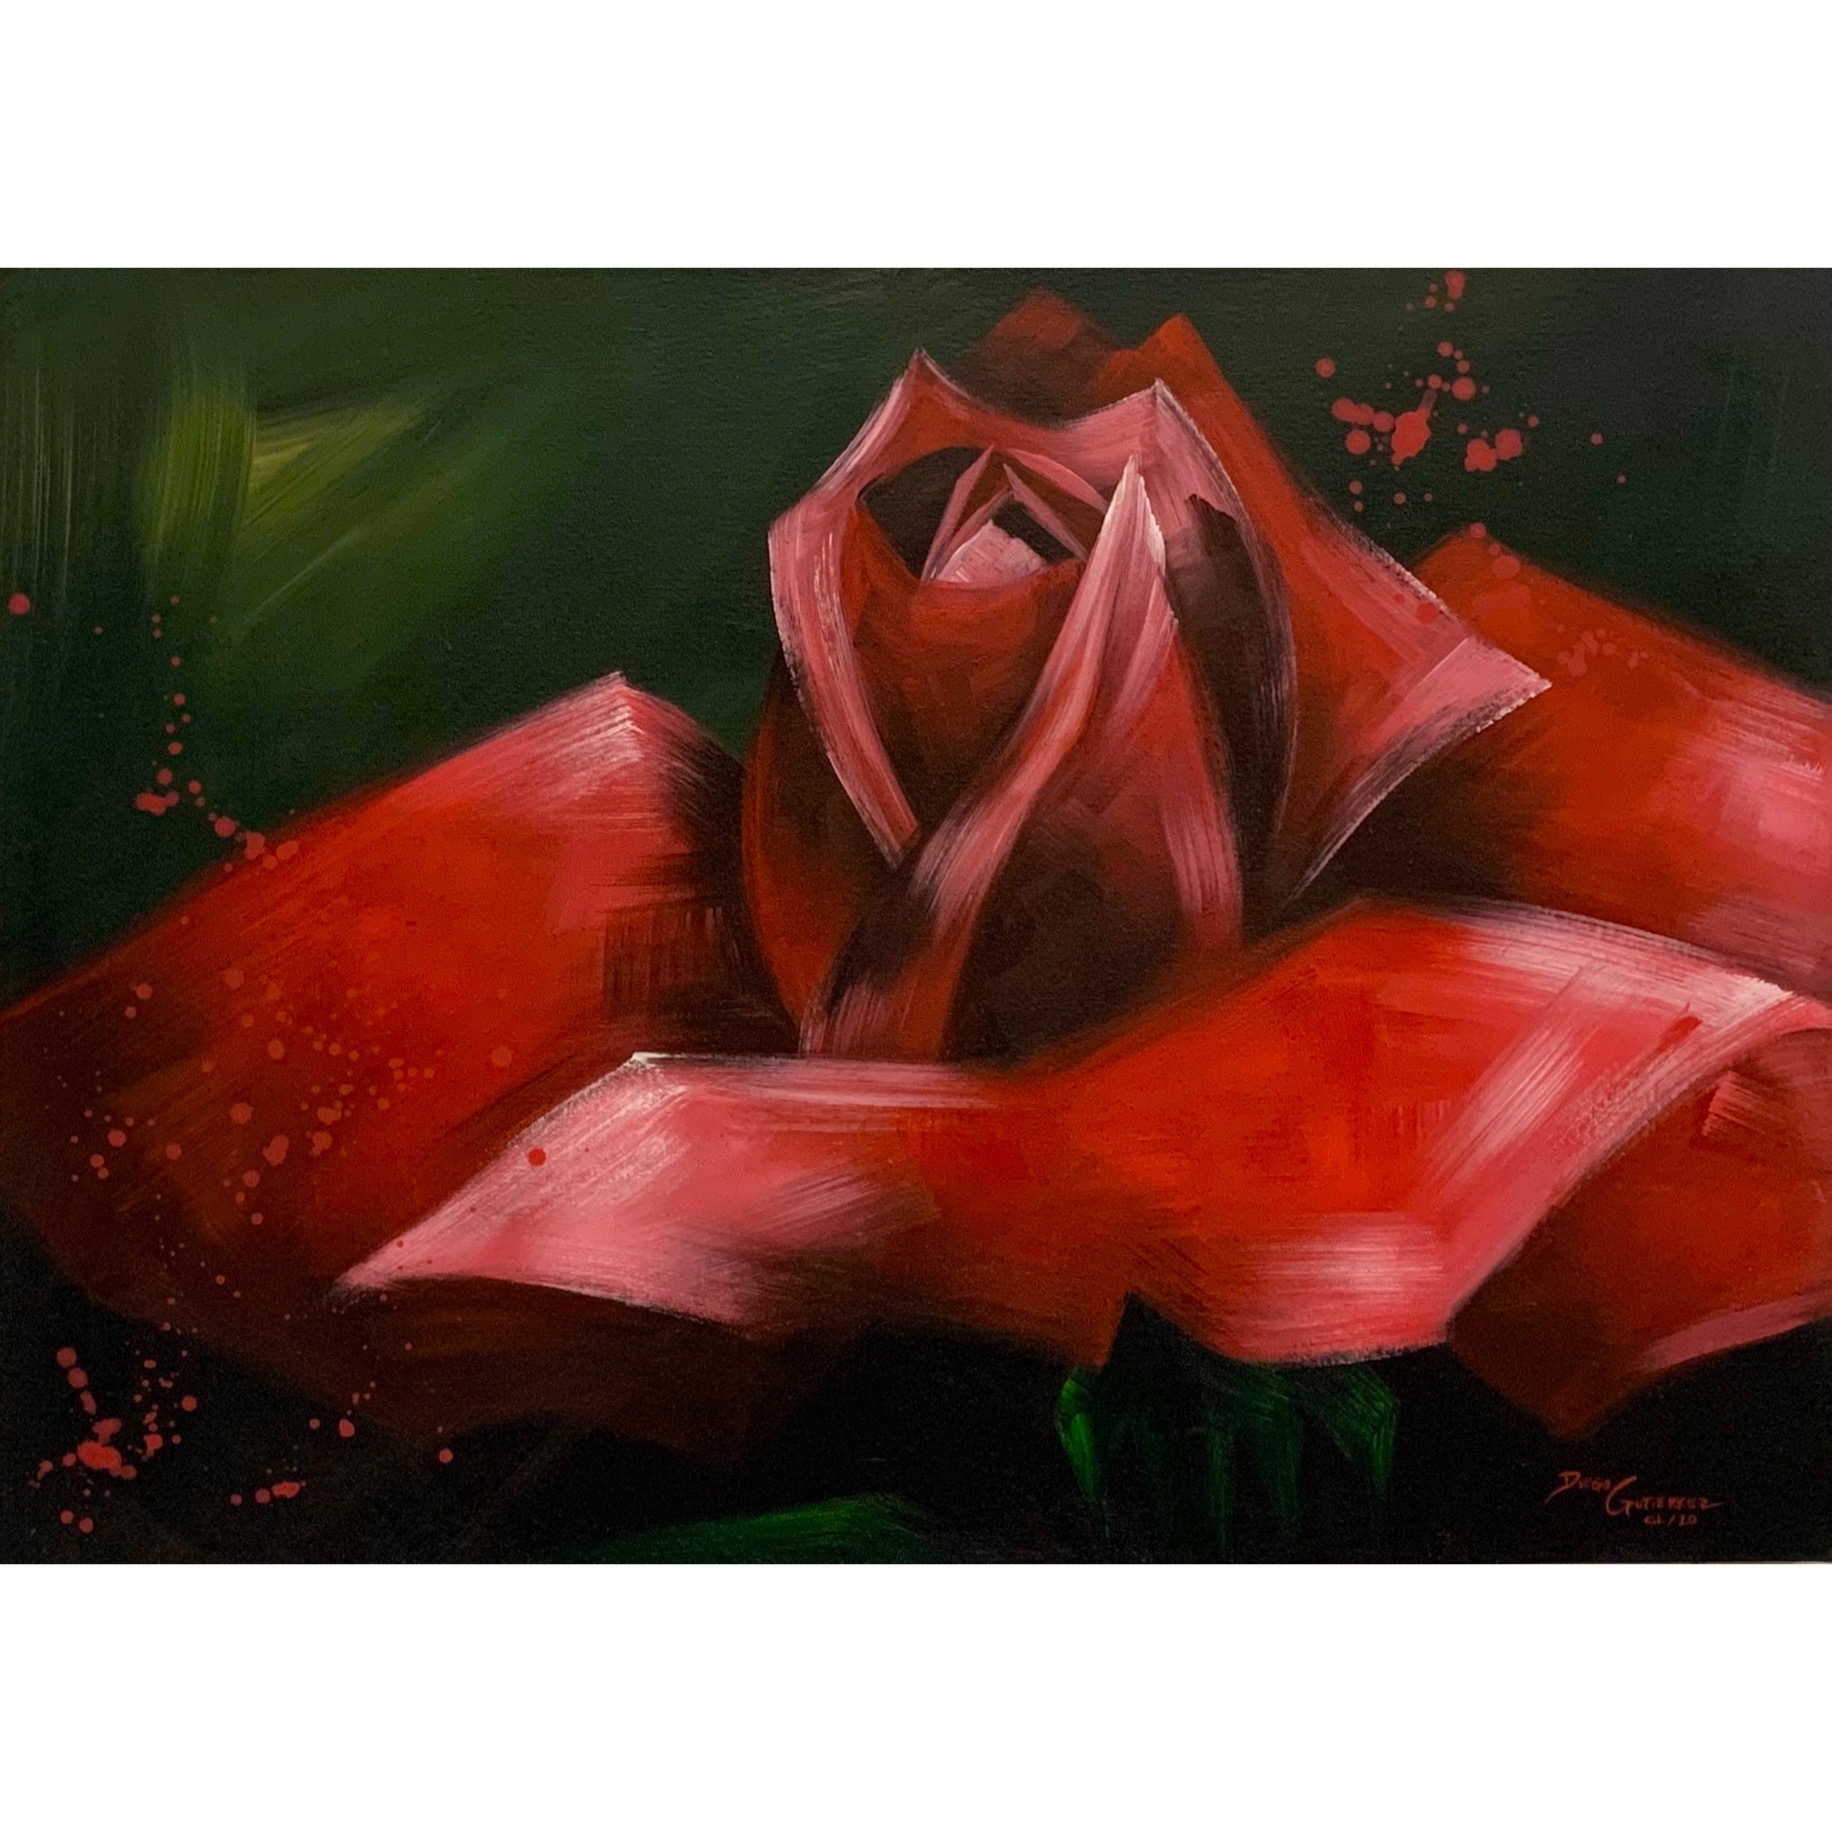 diego-gutierrez-gallery-plants-red-rose-01